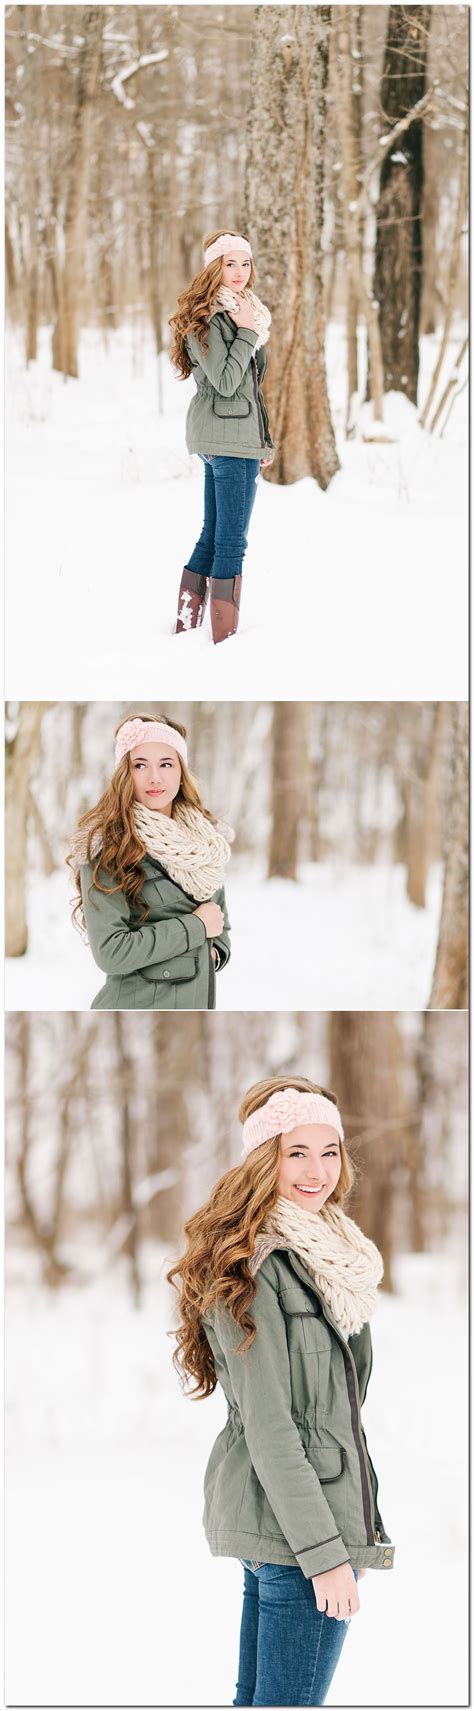 20 Beautiful Snow Photo Shoot Ideas Winter Senior Photography